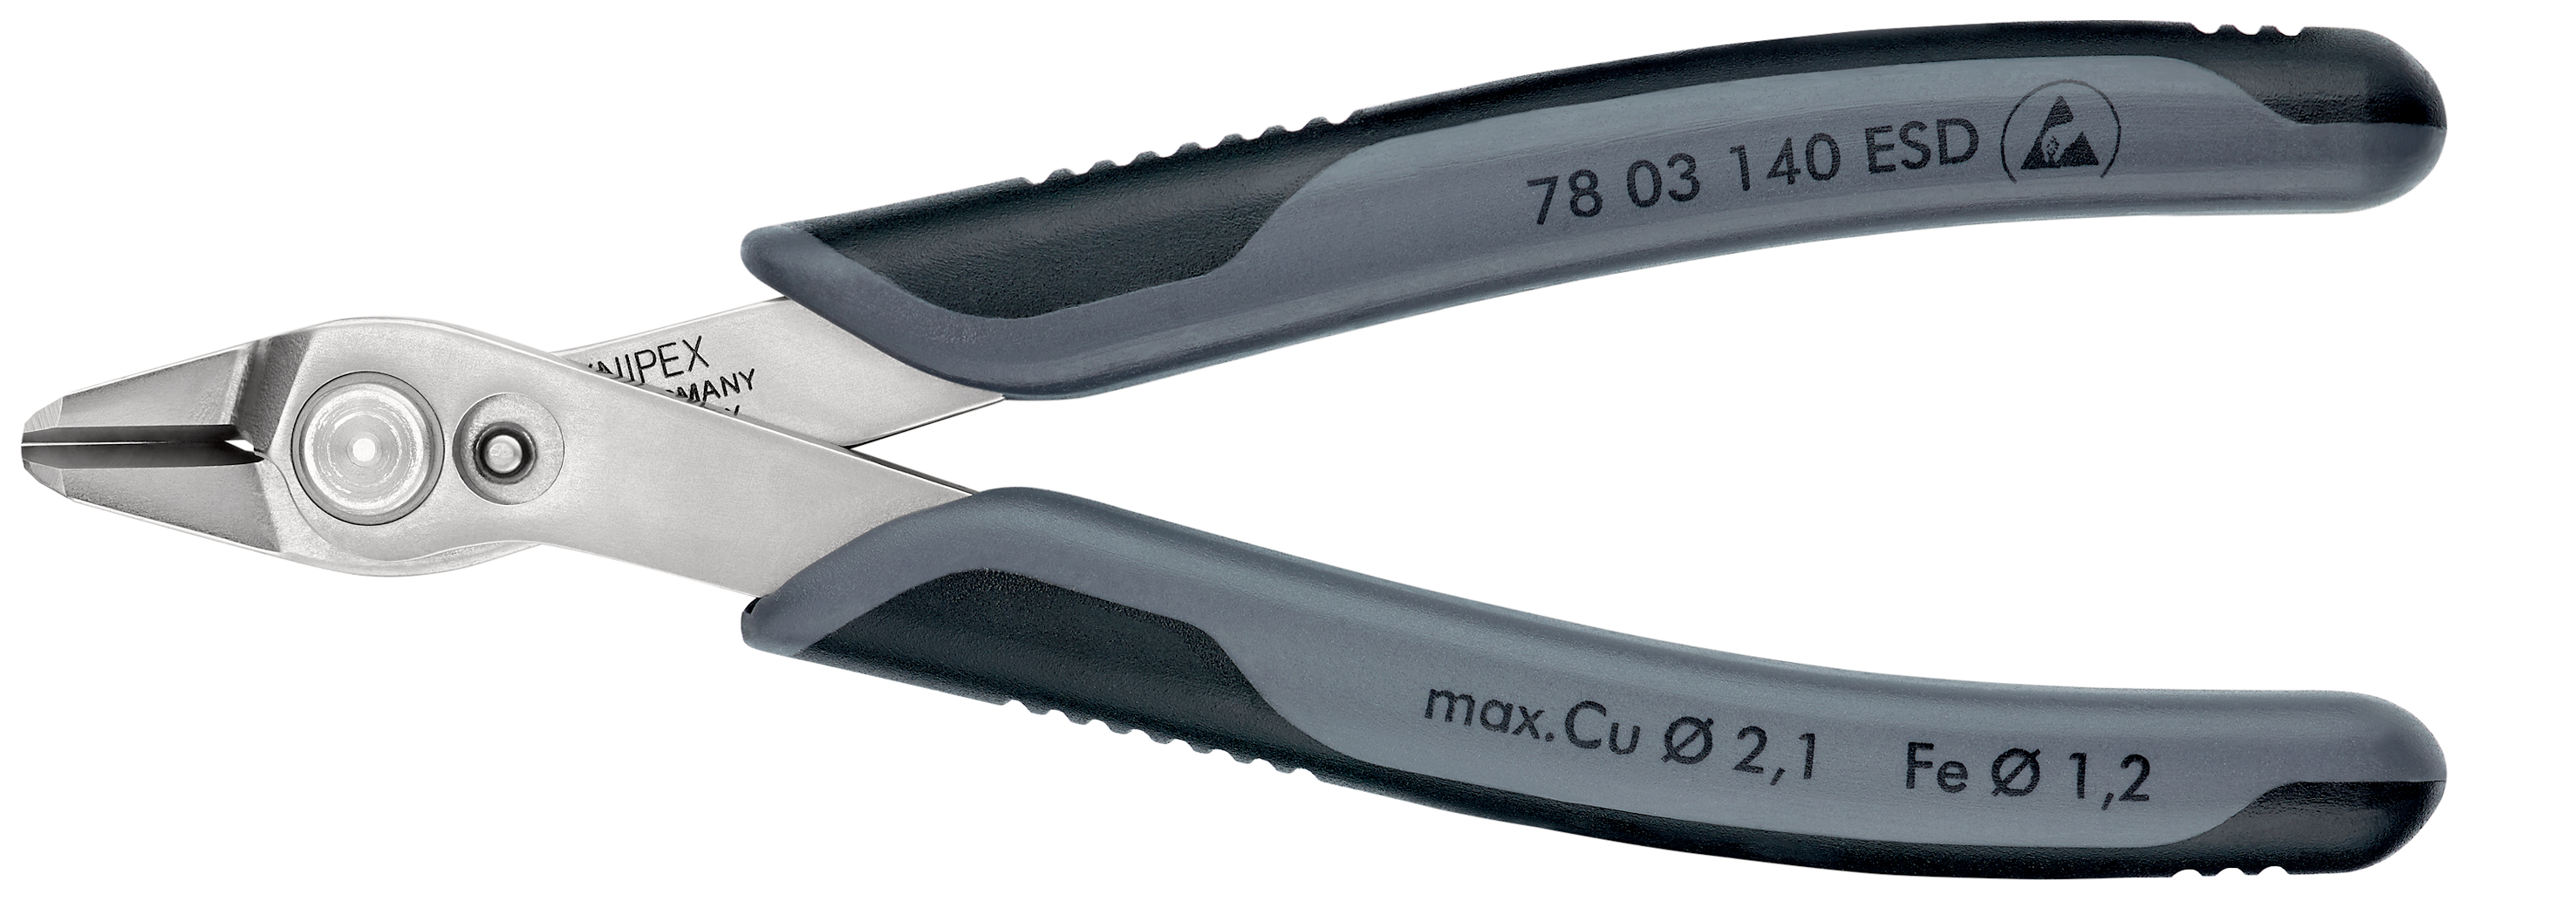 Knipex 7803140ESD Electronic Super Knips® XL ESD Sfic de precizie Ø 0,2 – 2,1 mm, manşoane multicomponent, lungime 140 mm